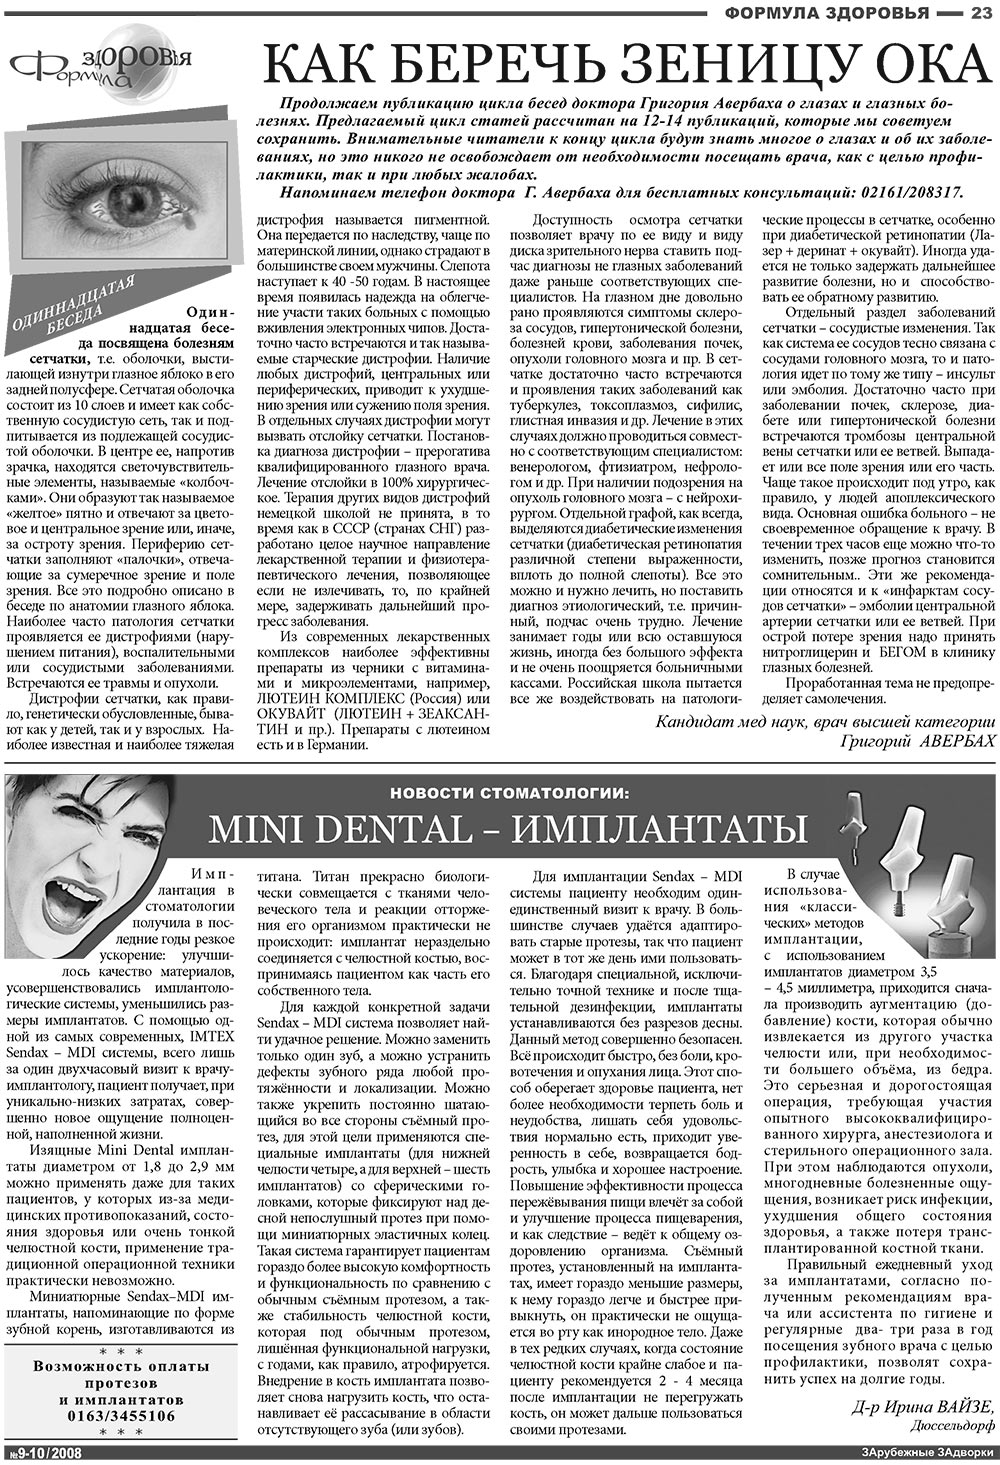 Известия BW (газета). 2008 год, номер 10, стр. 23